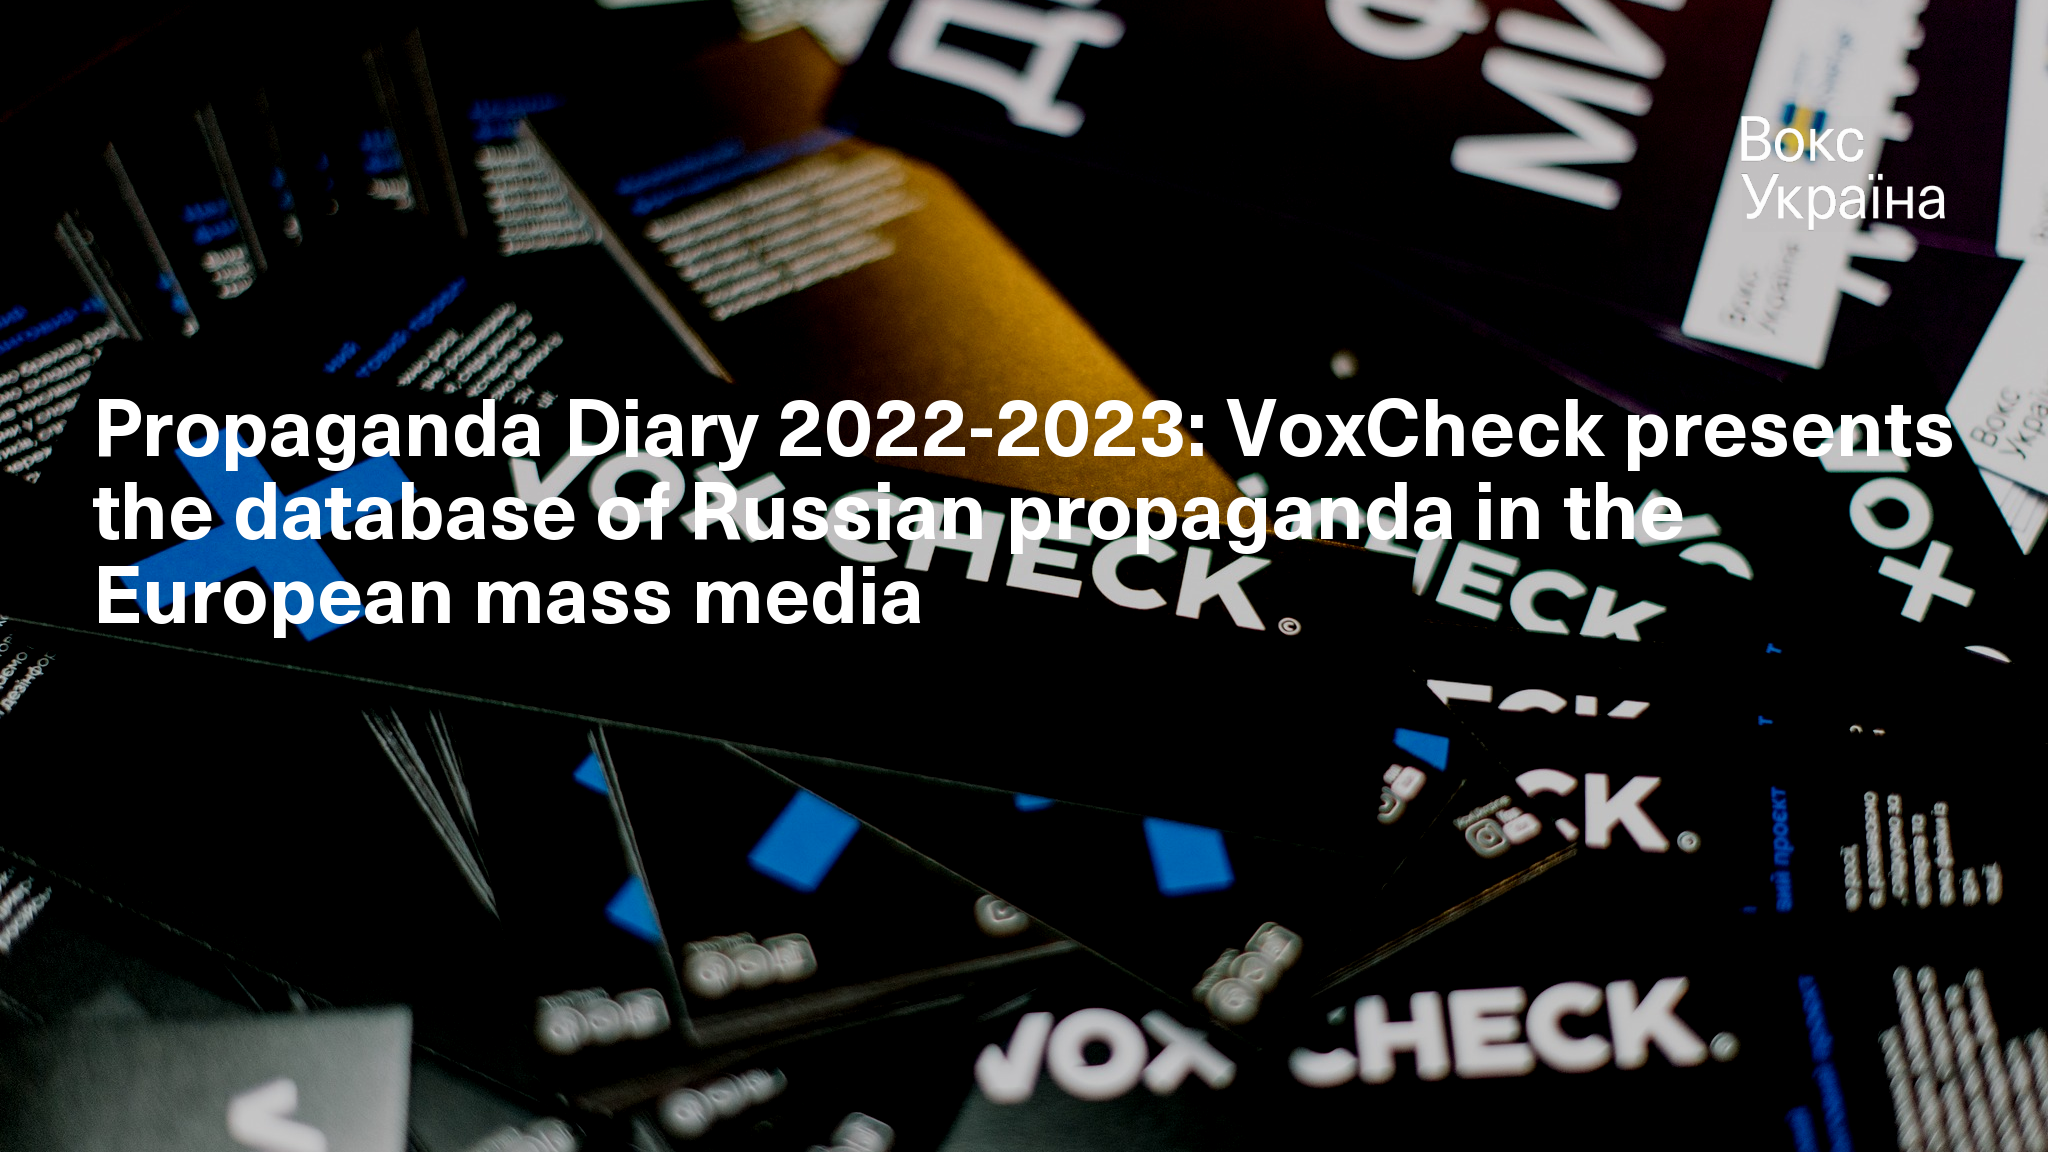 propaganda examples 2022